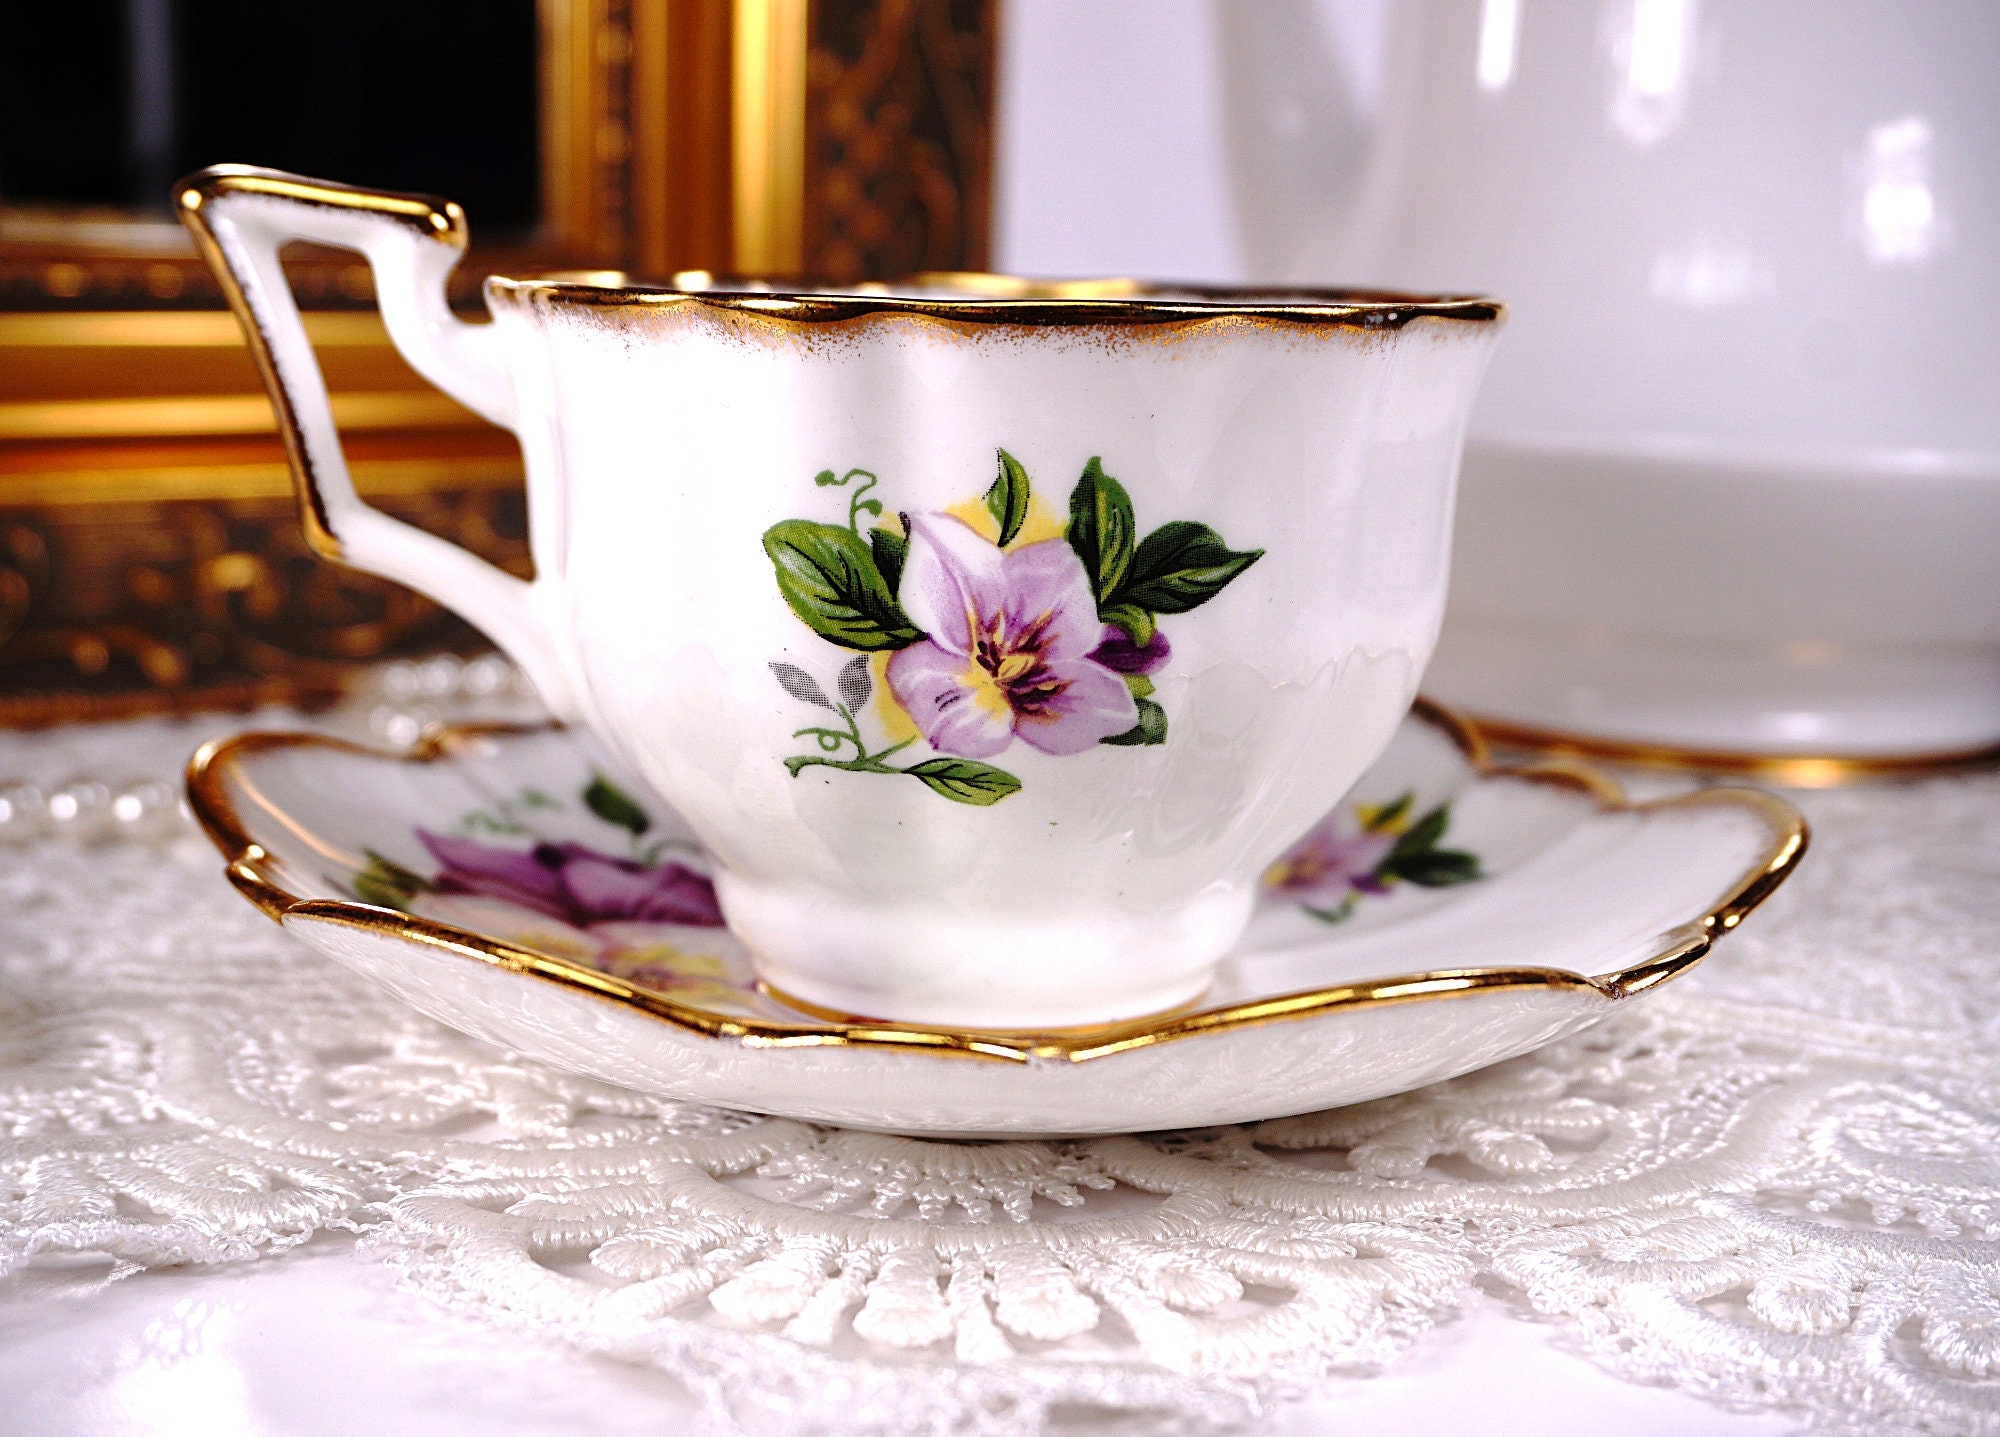 Lavender Turrell Mug Mugs & Teacups by undefined